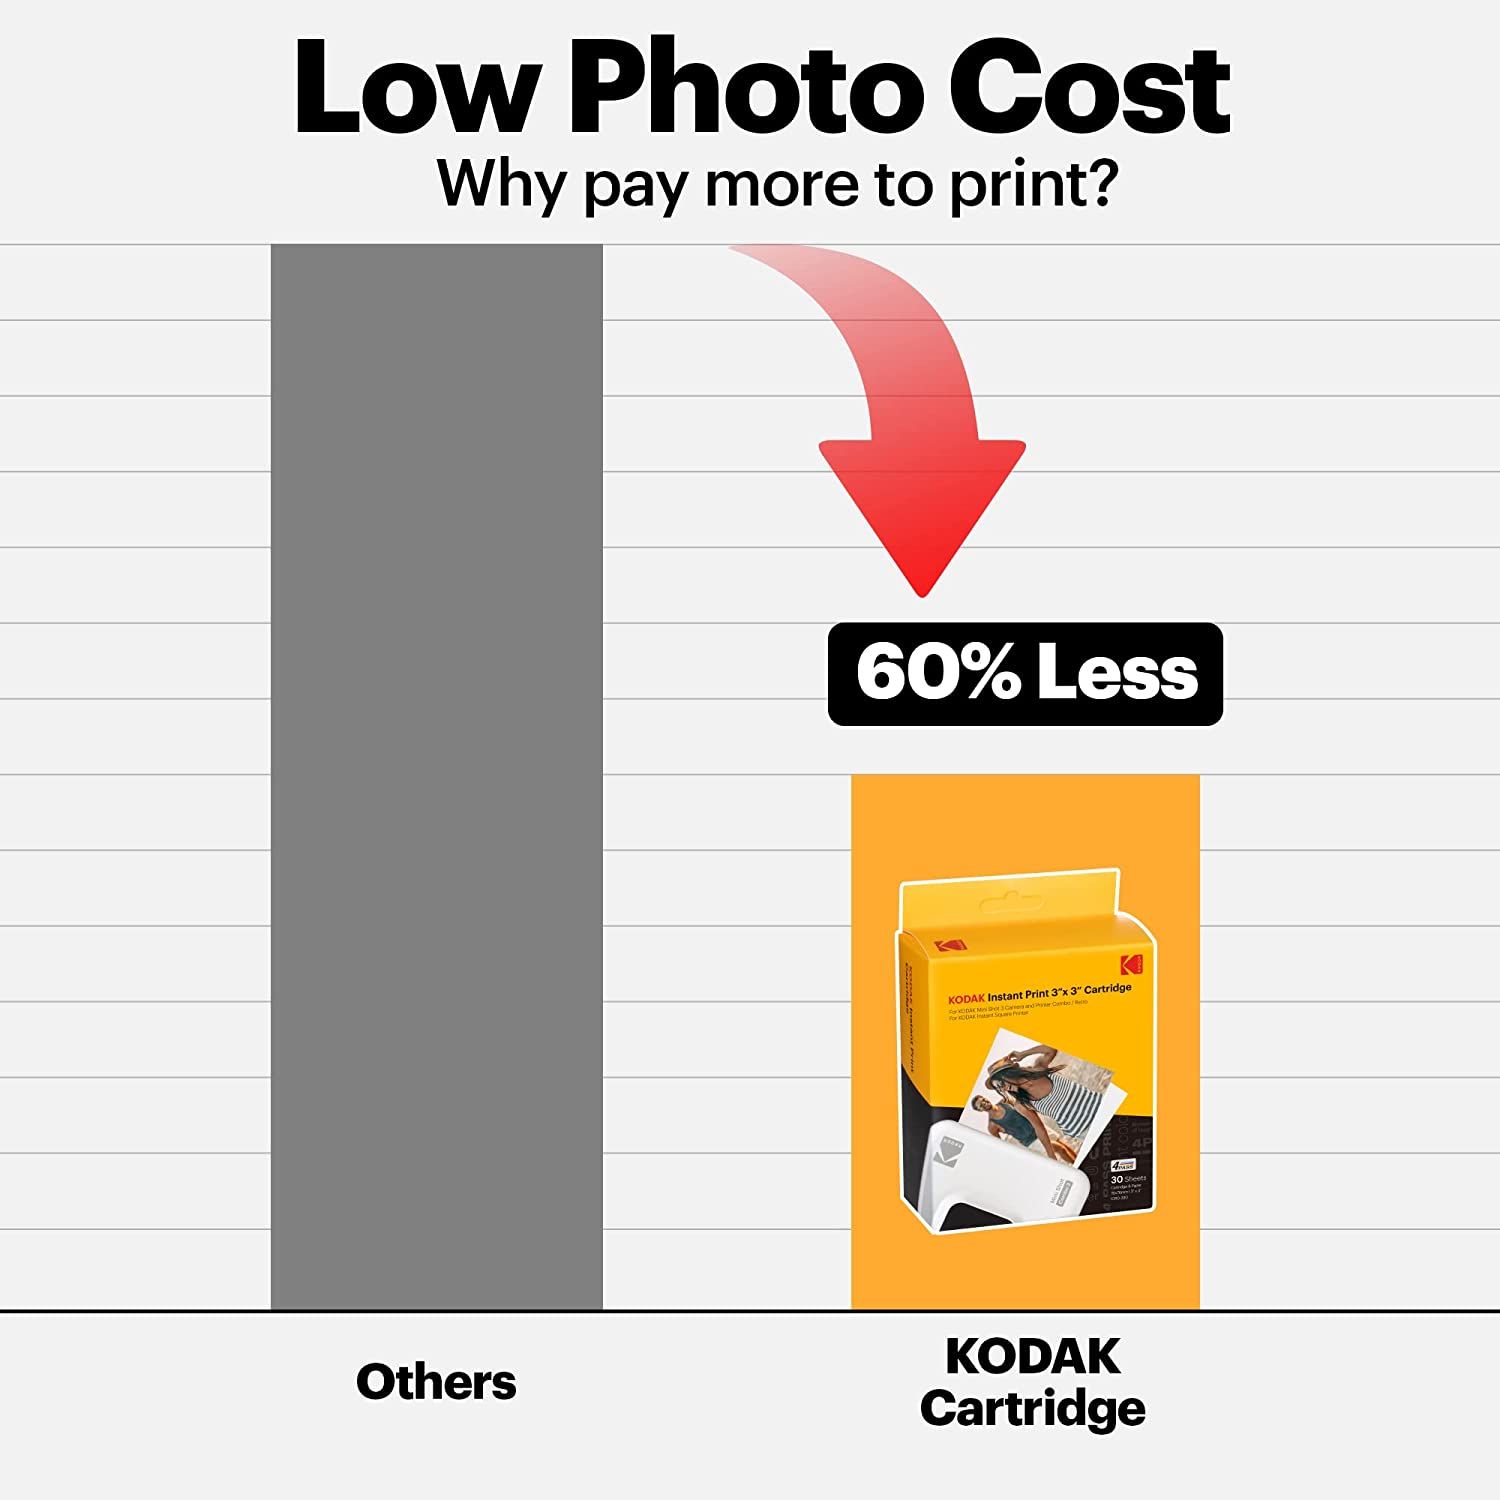 Kodak Mini 3 Retro Portable Instant Photo Printer  3 x 3 Photo Printer +  60 Sheets Bundle – Kodak Photo Printer